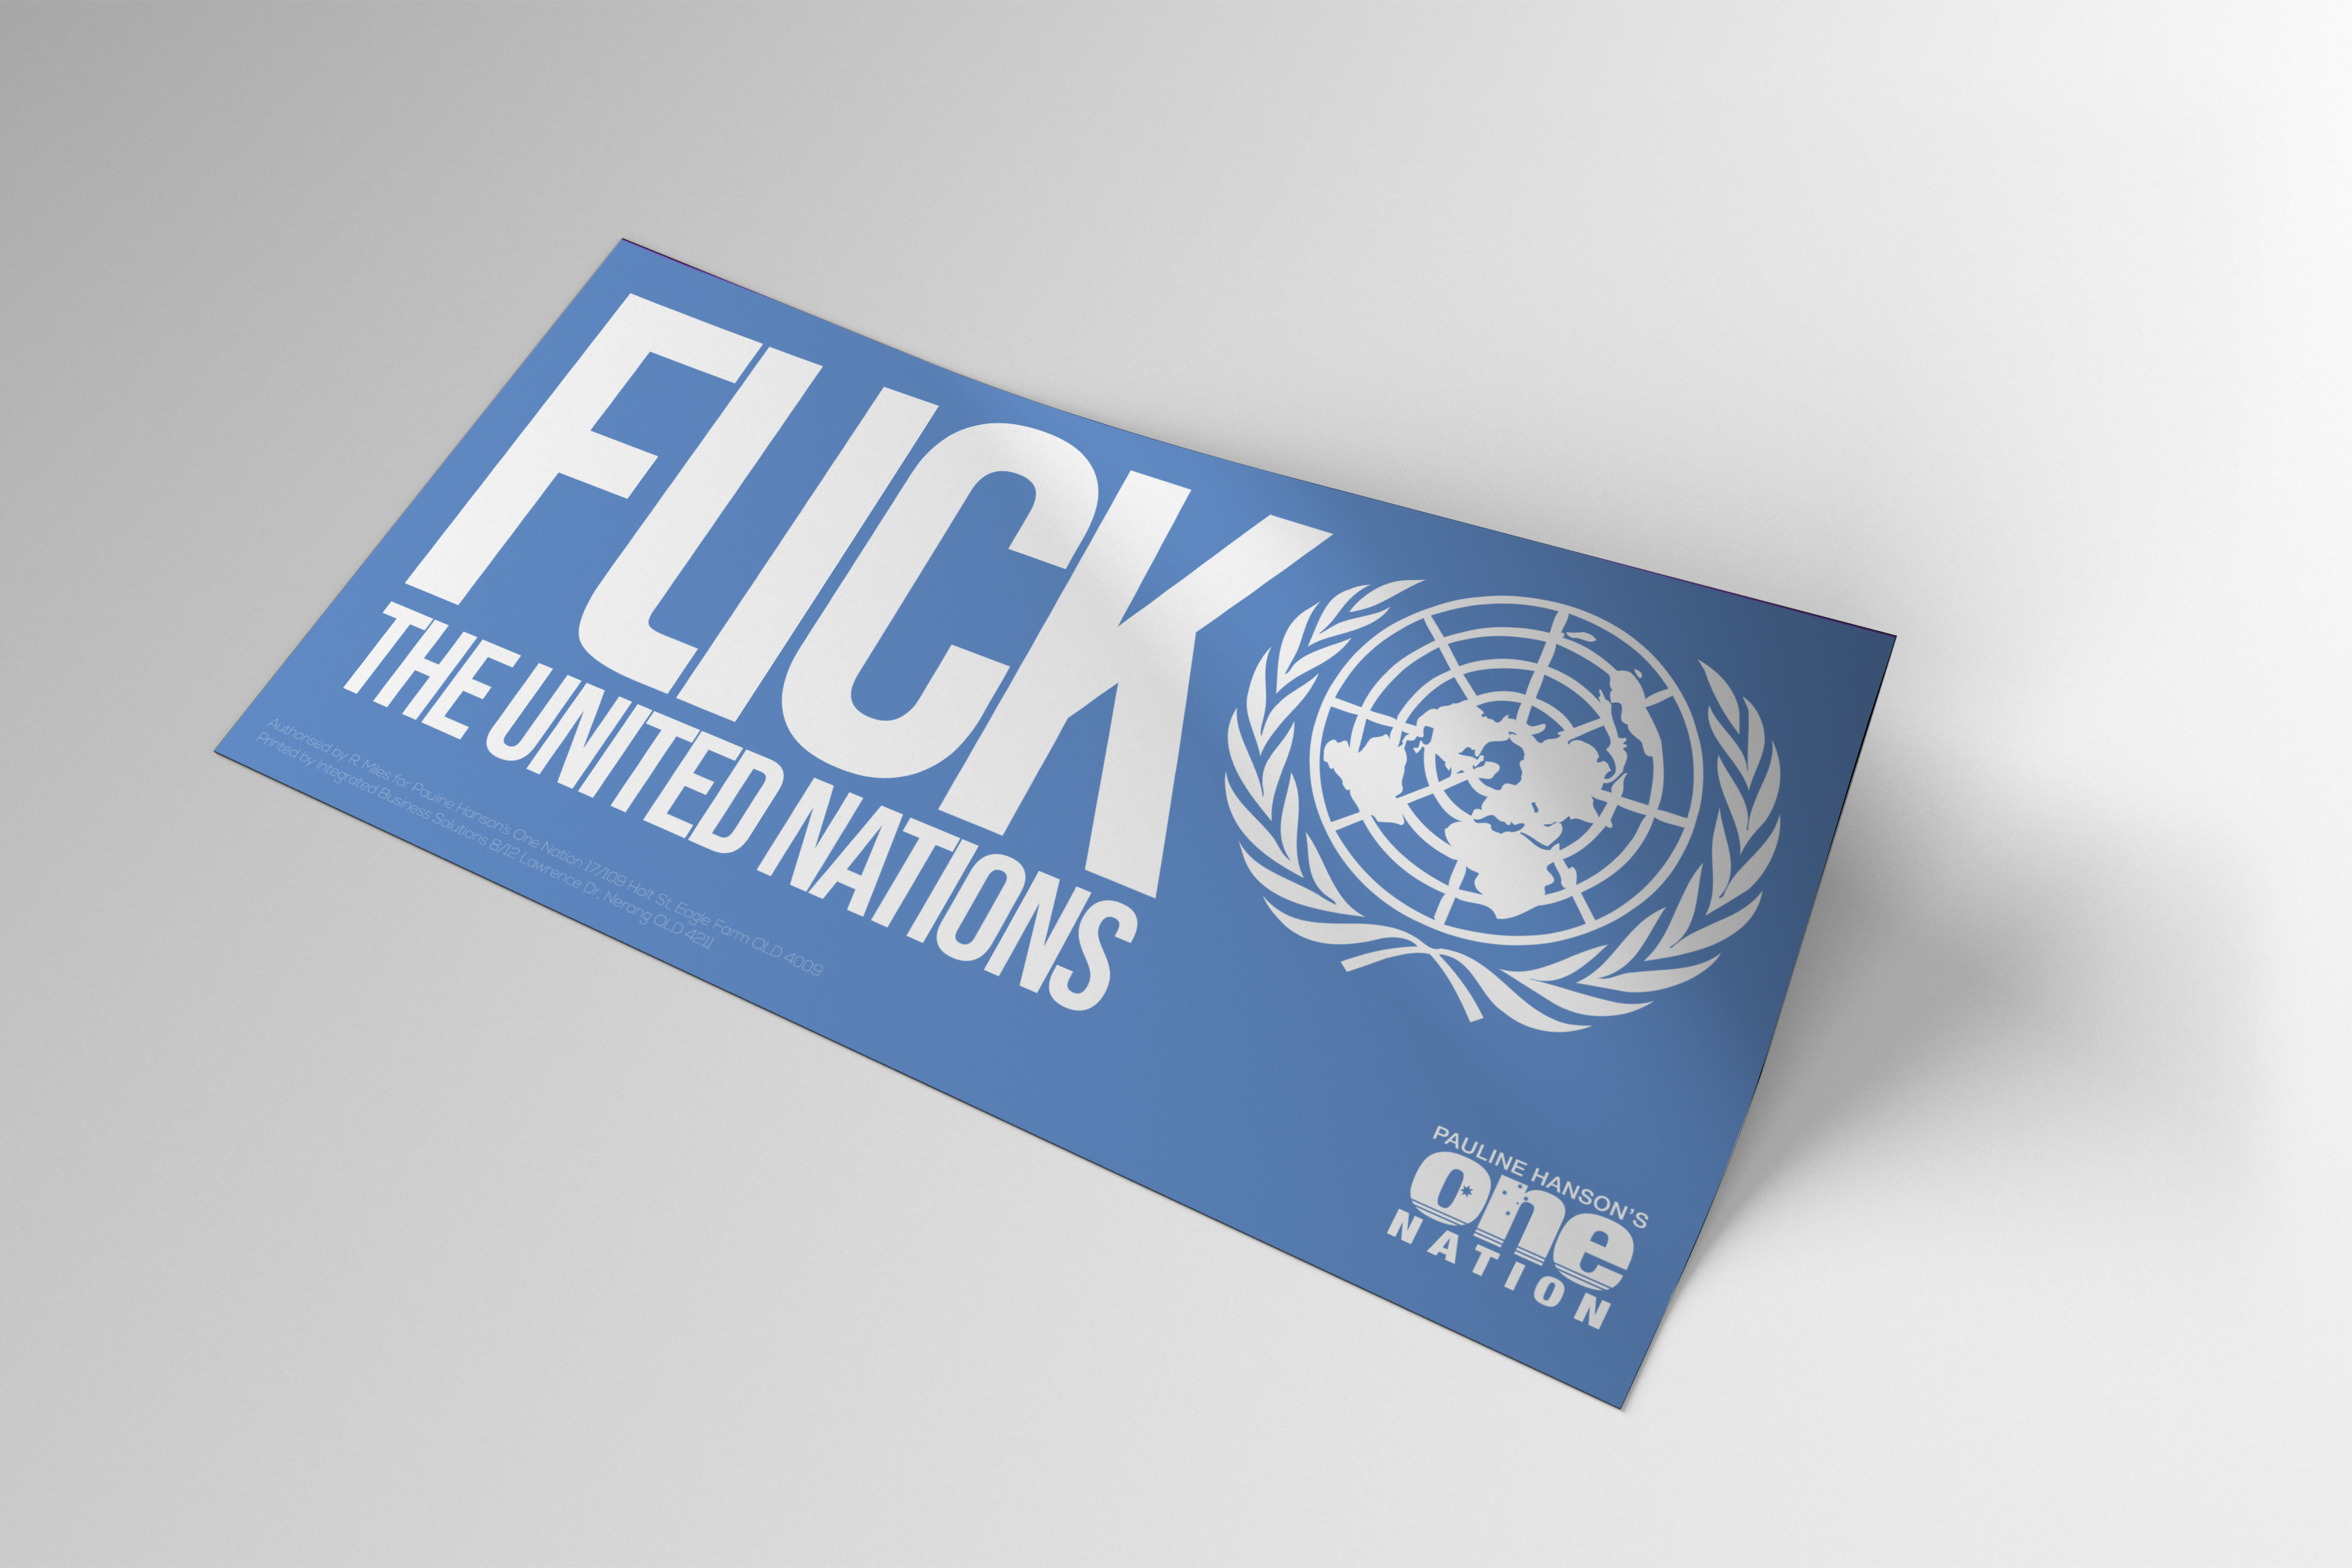 Flick The United Nations Bumper Sticker